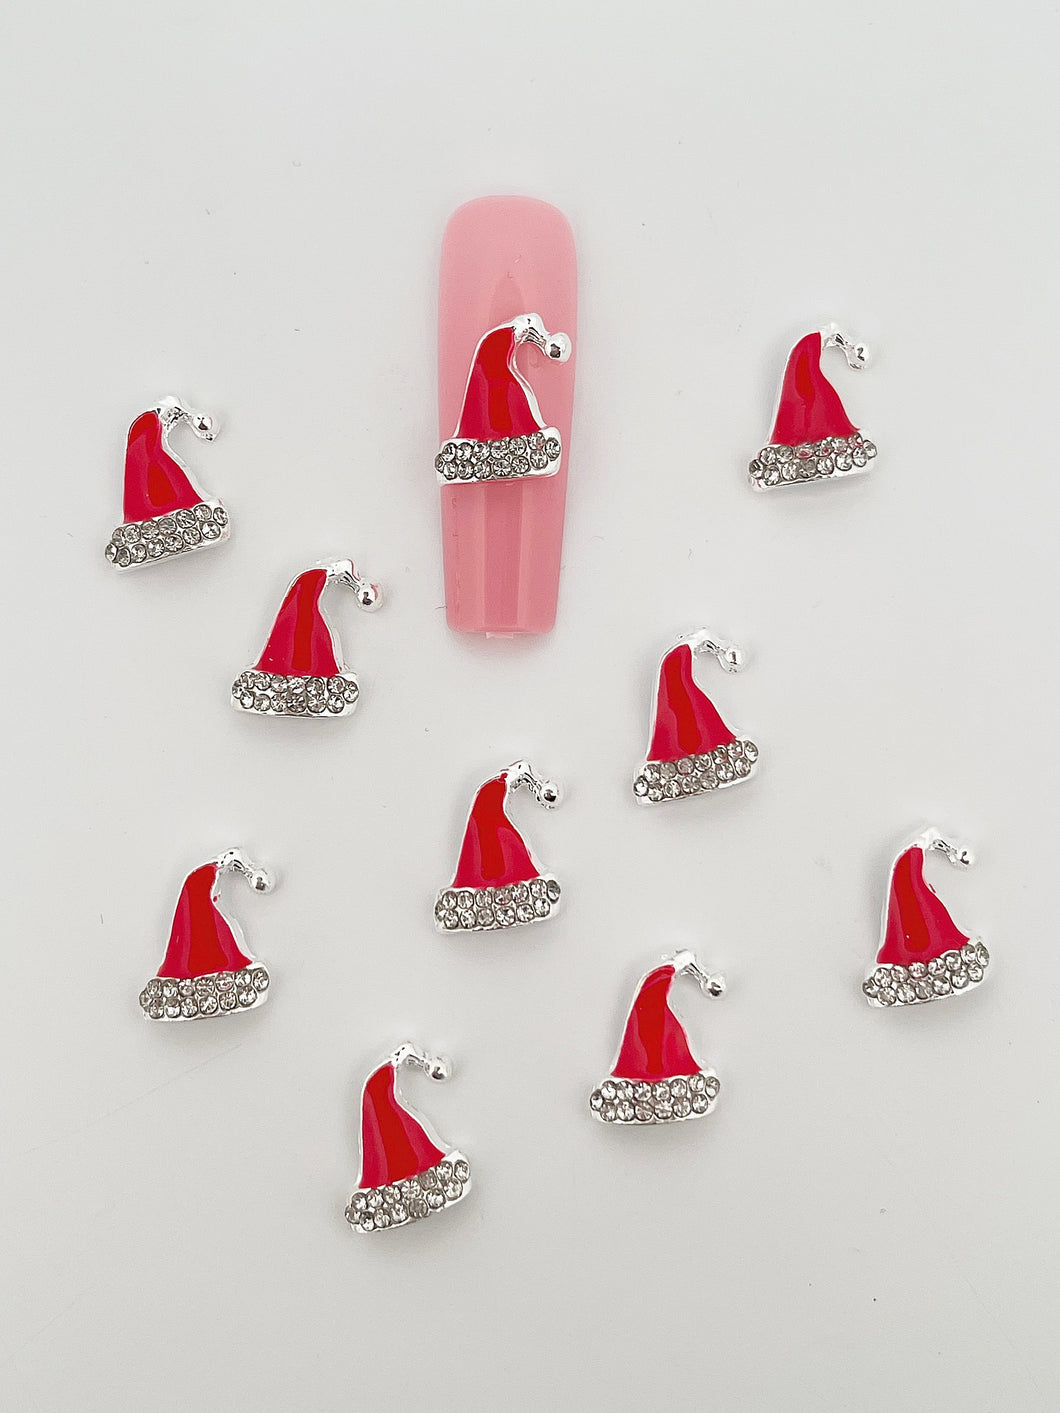 Red Santa Hat Christmas Nail Charms 10 pieces